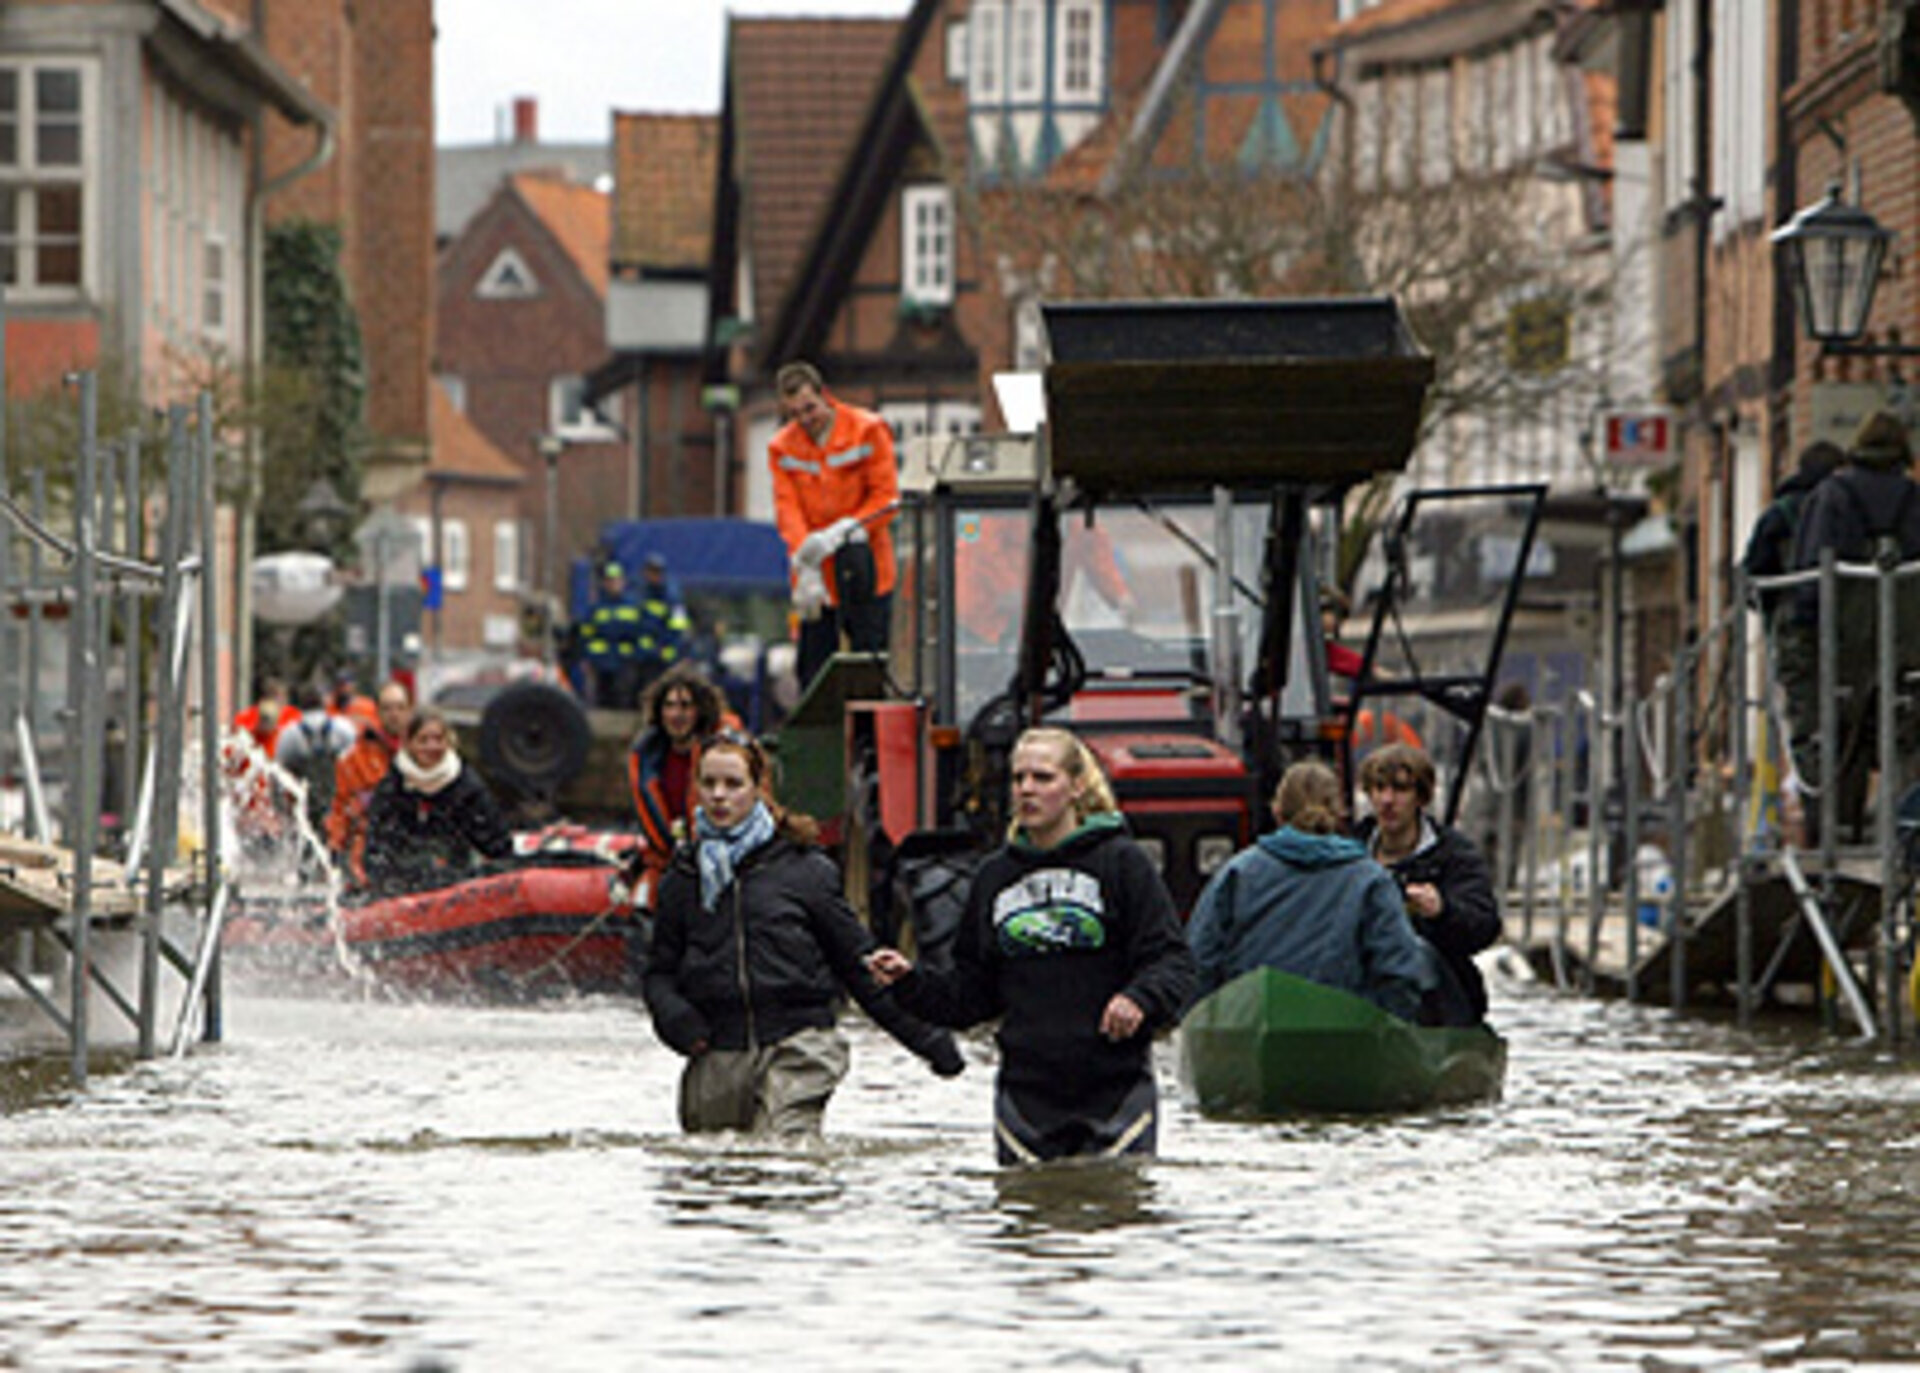 Residents make their way through a flooded street